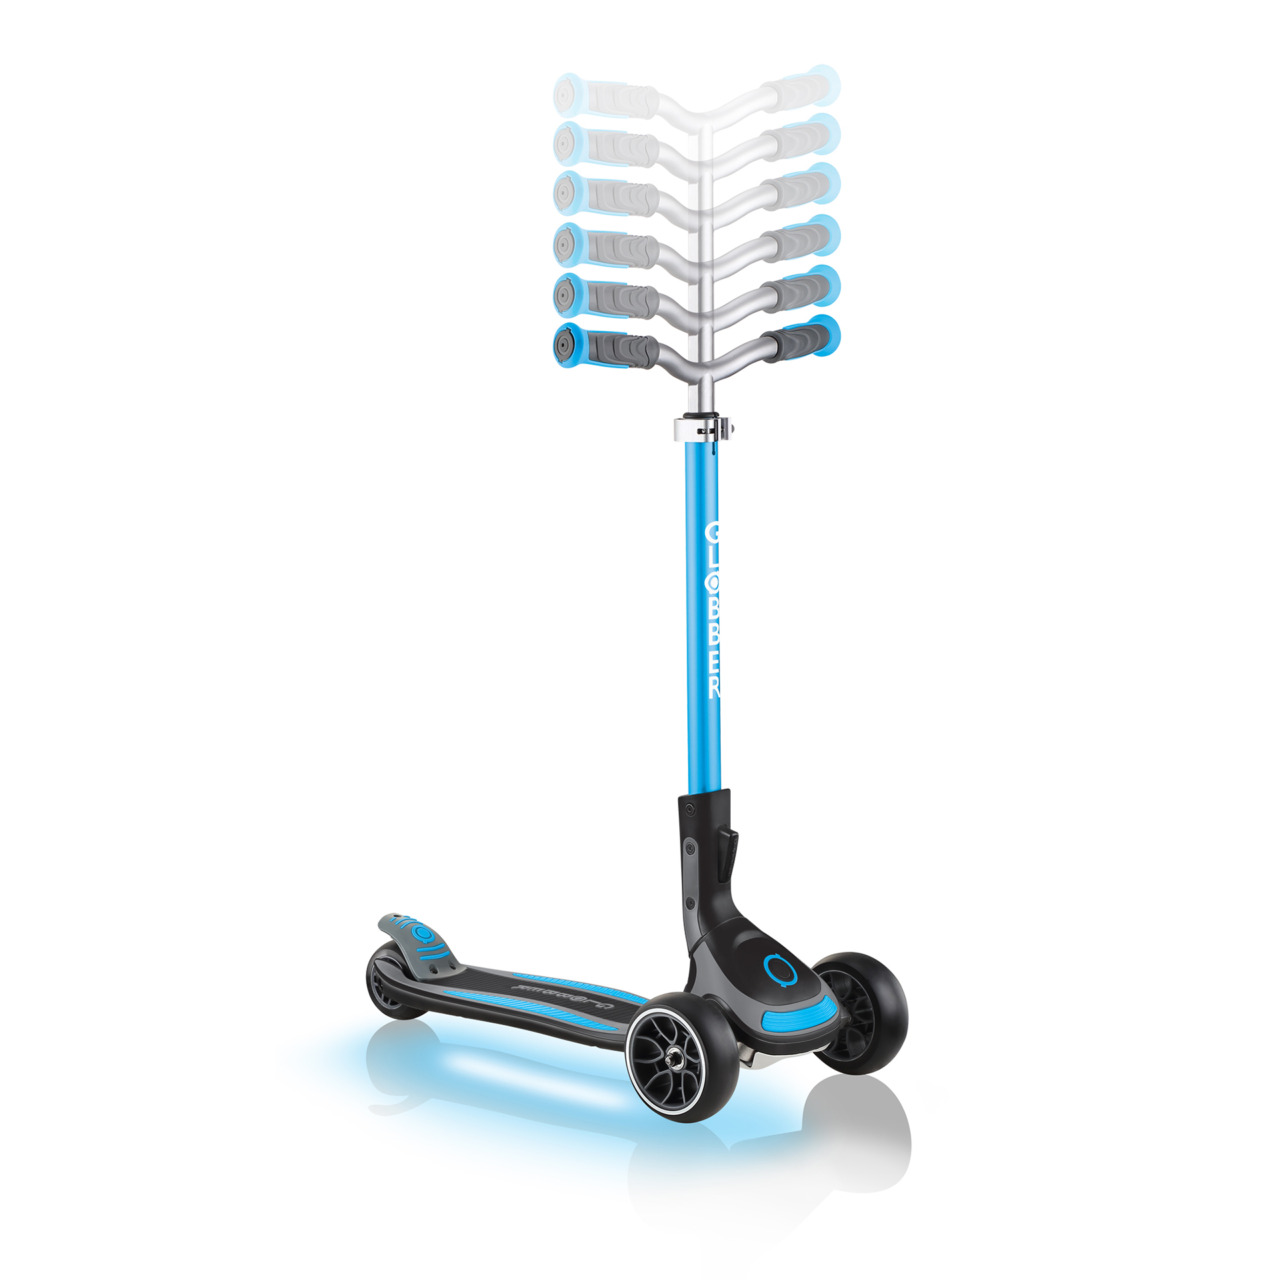 613 101 Height Adjustable Blue Light Up Scooter